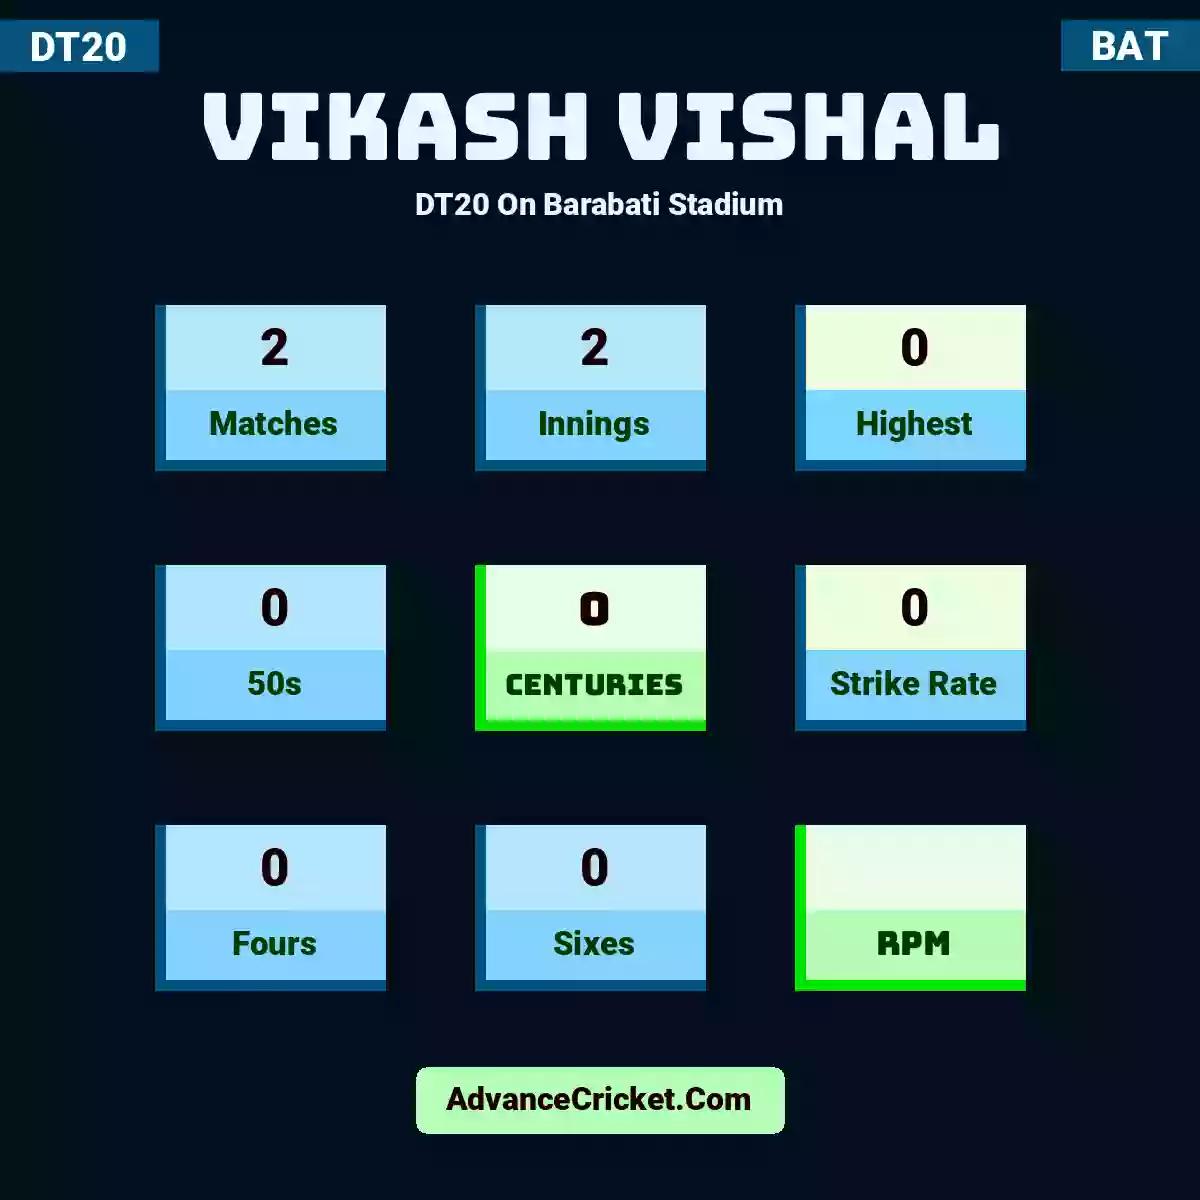 Vikash Vishal DT20  On Barabati Stadium, Vikash Vishal played 2 matches, scored 0 runs as highest, 0 half-centuries, and 0 centuries, with a strike rate of 0. V.Vishal hit 0 fours and 0 sixes.